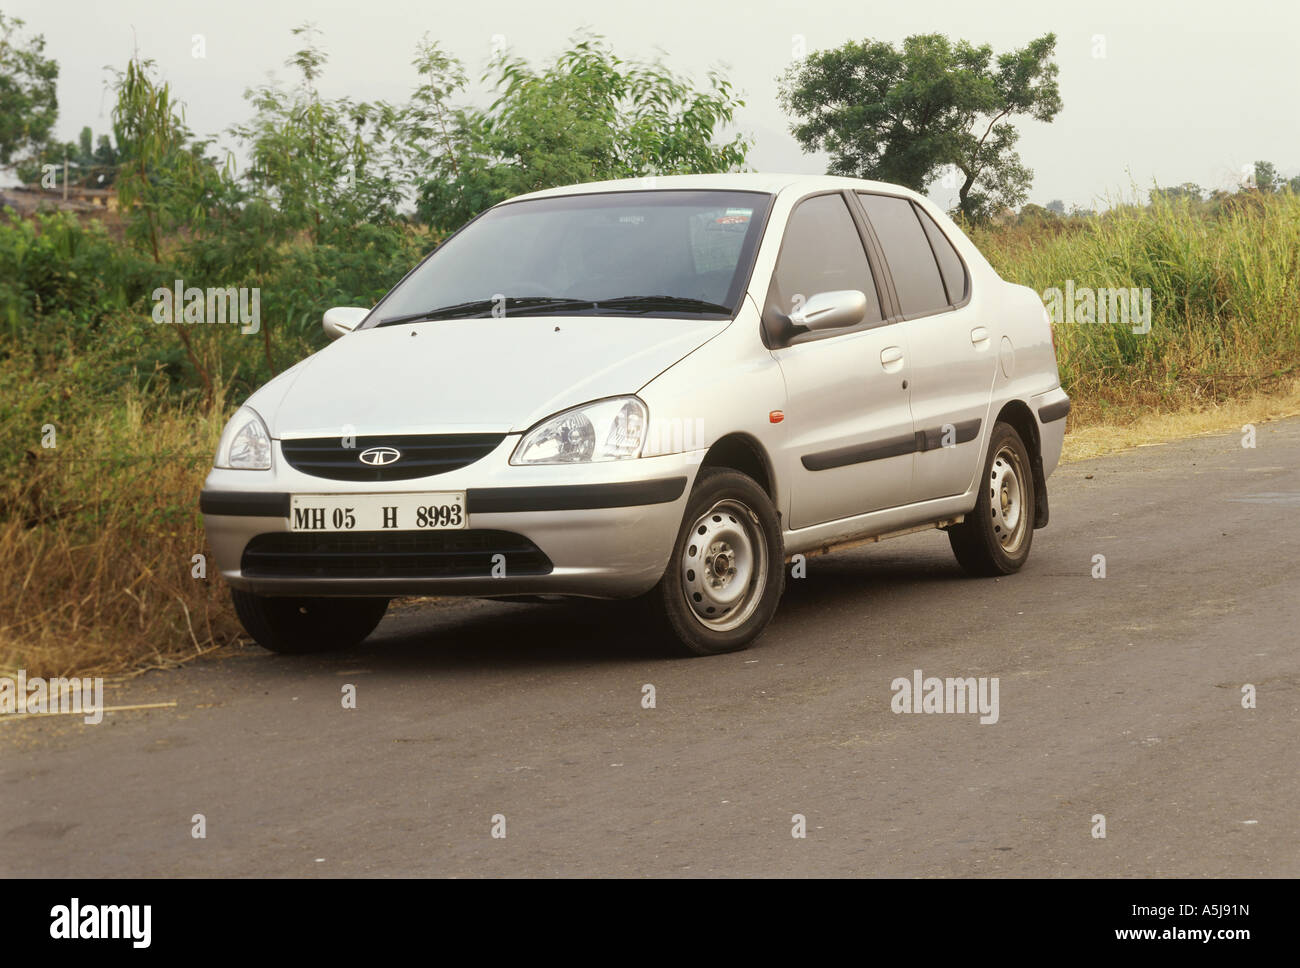 Tata Indica, silver color car, India Stock Photo